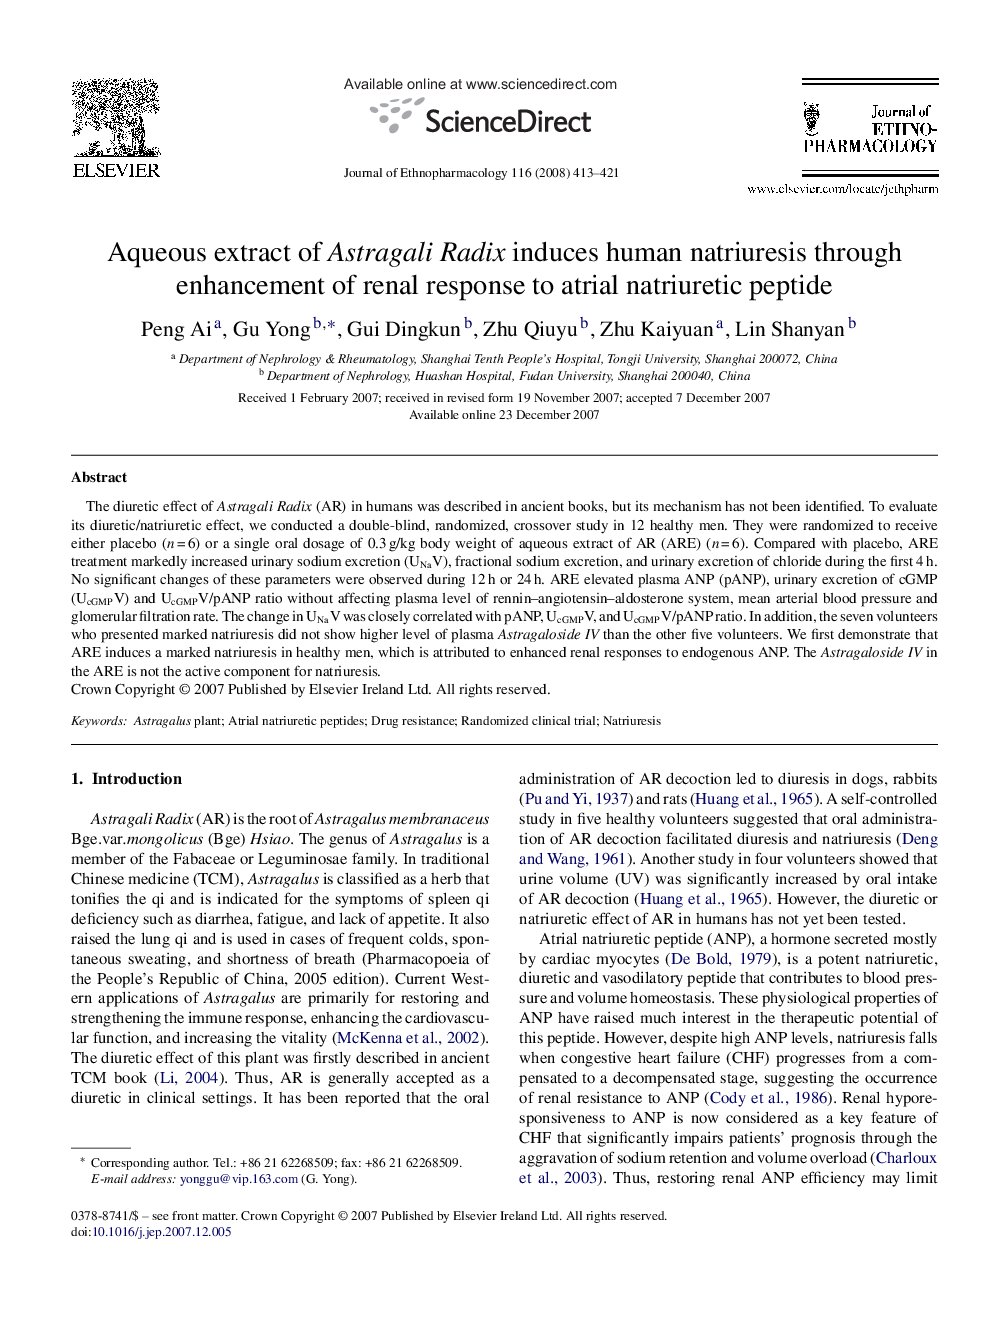 Aqueous extract of Astragali Radix induces human natriuresis through enhancement of renal response to atrial natriuretic peptide